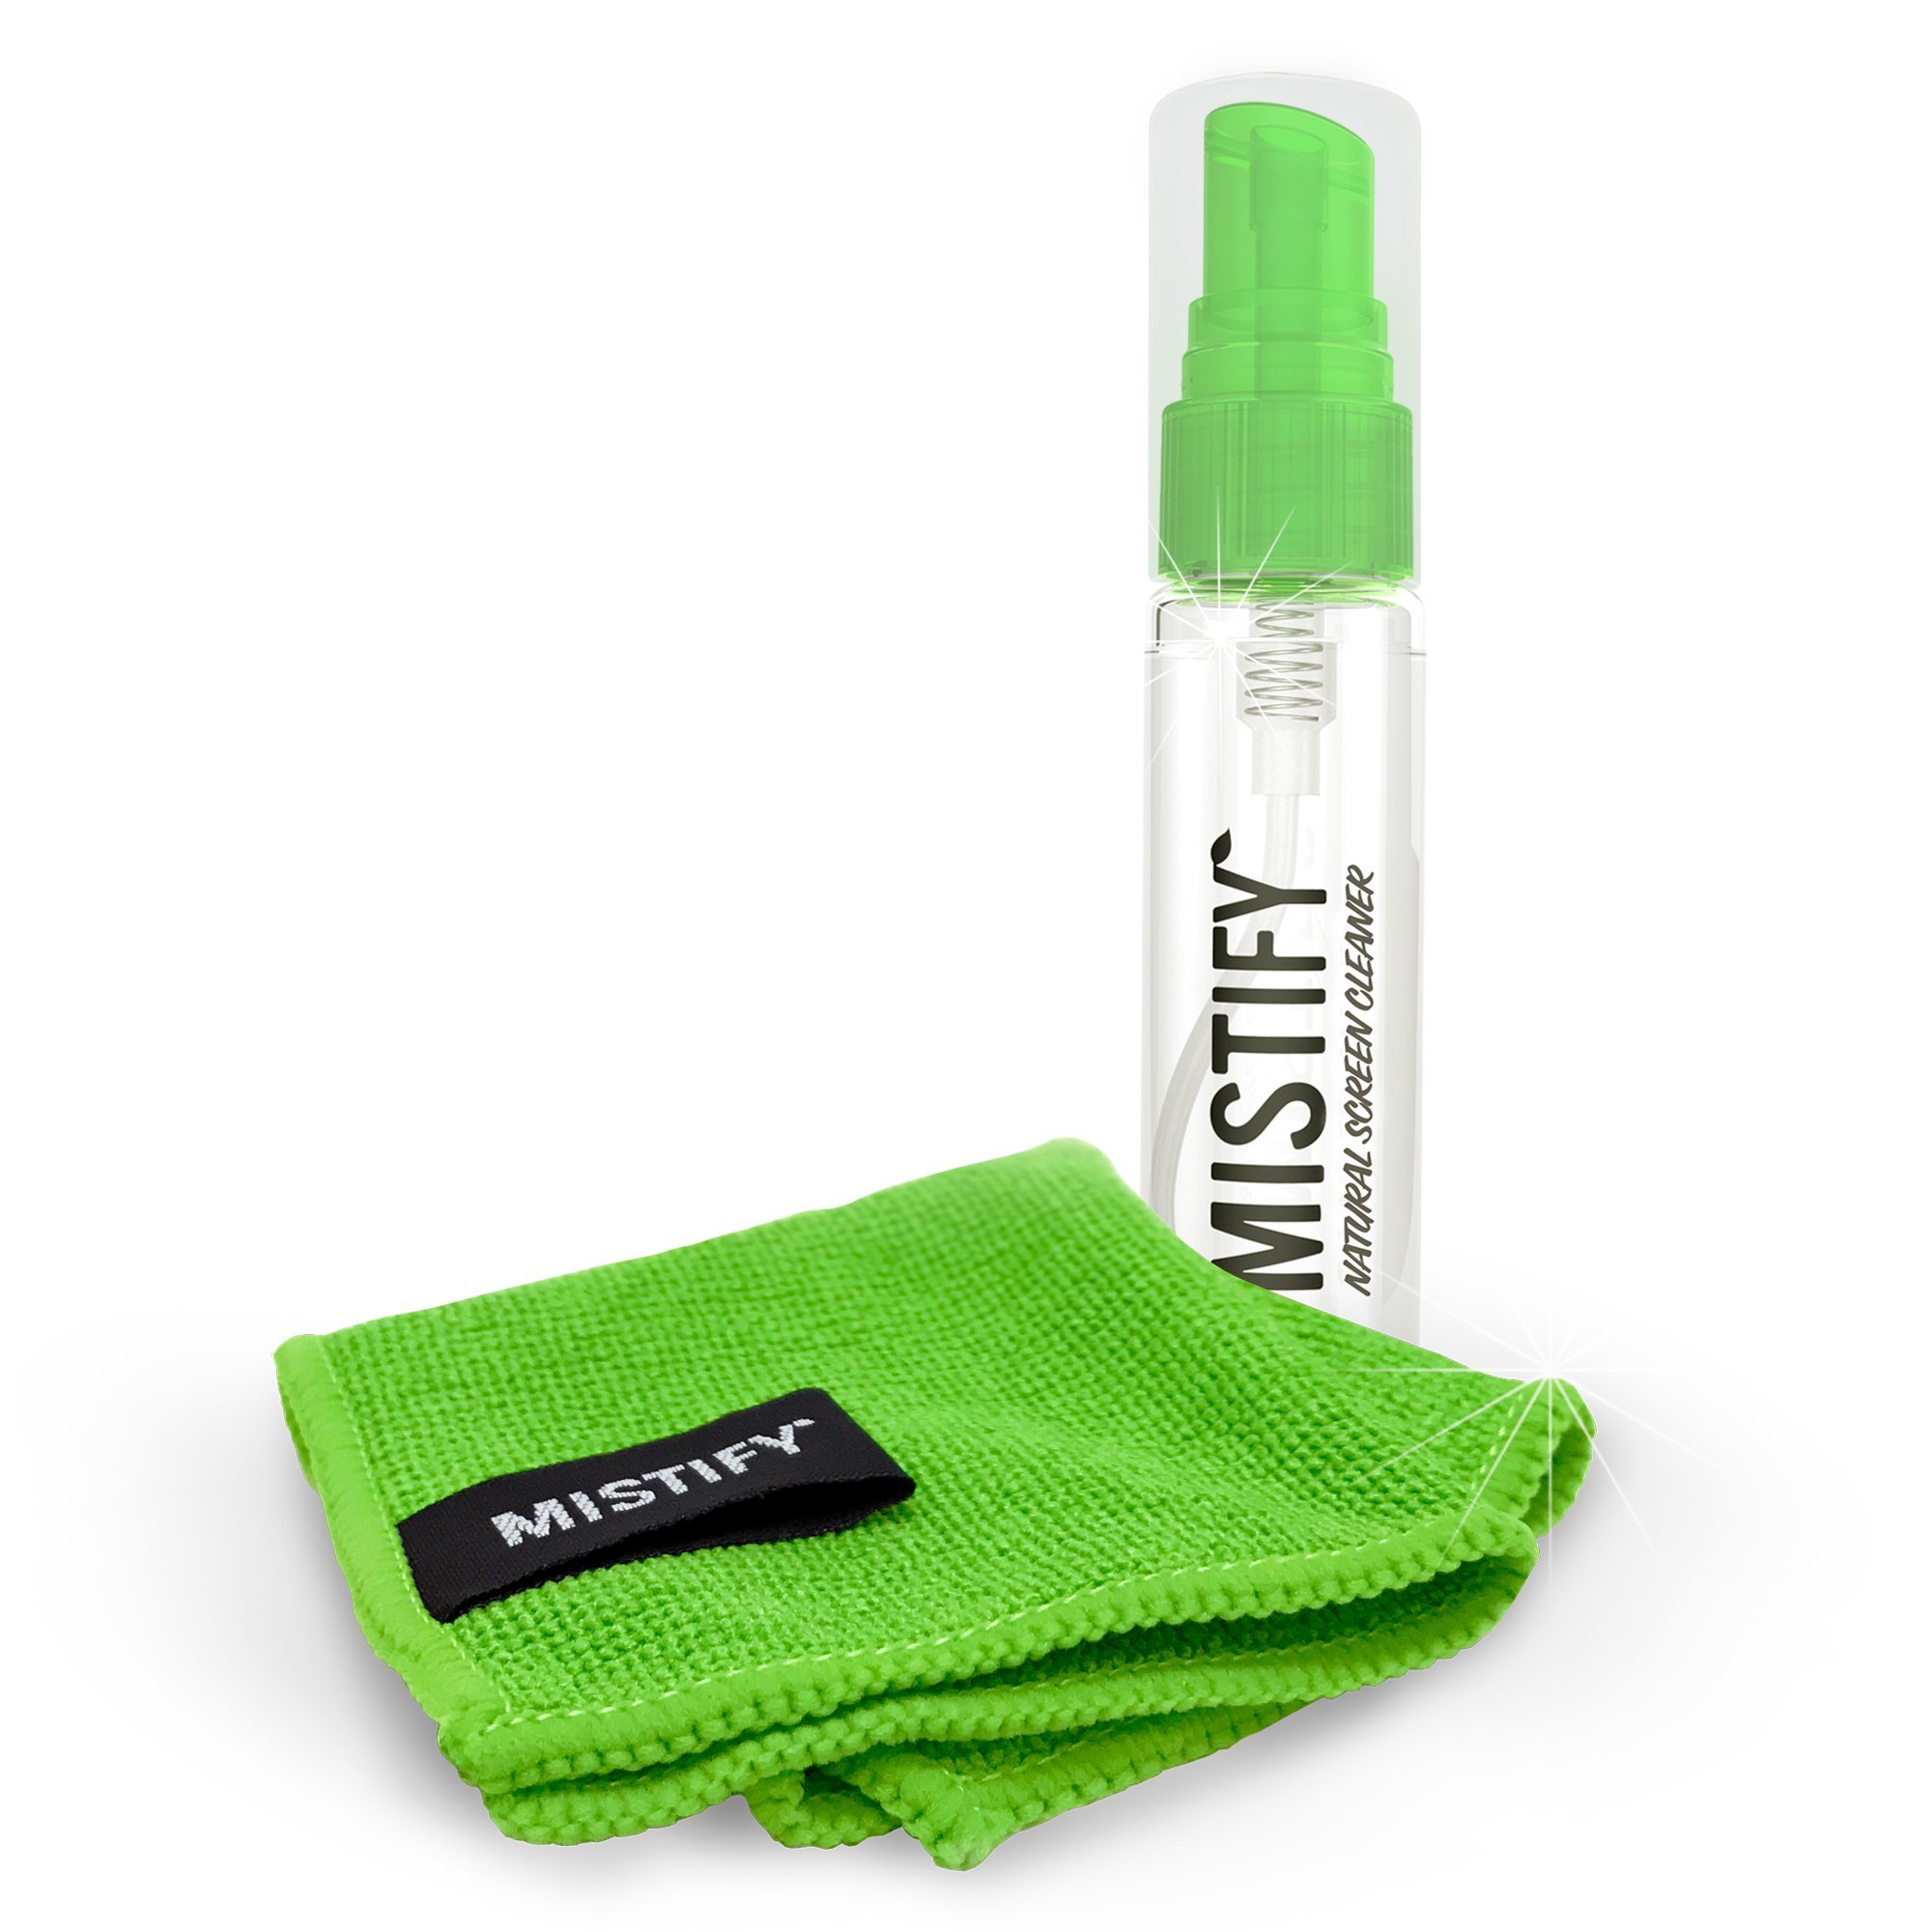 Mistify Natural Screen Cleaner 40ml + Microfibre Cloth